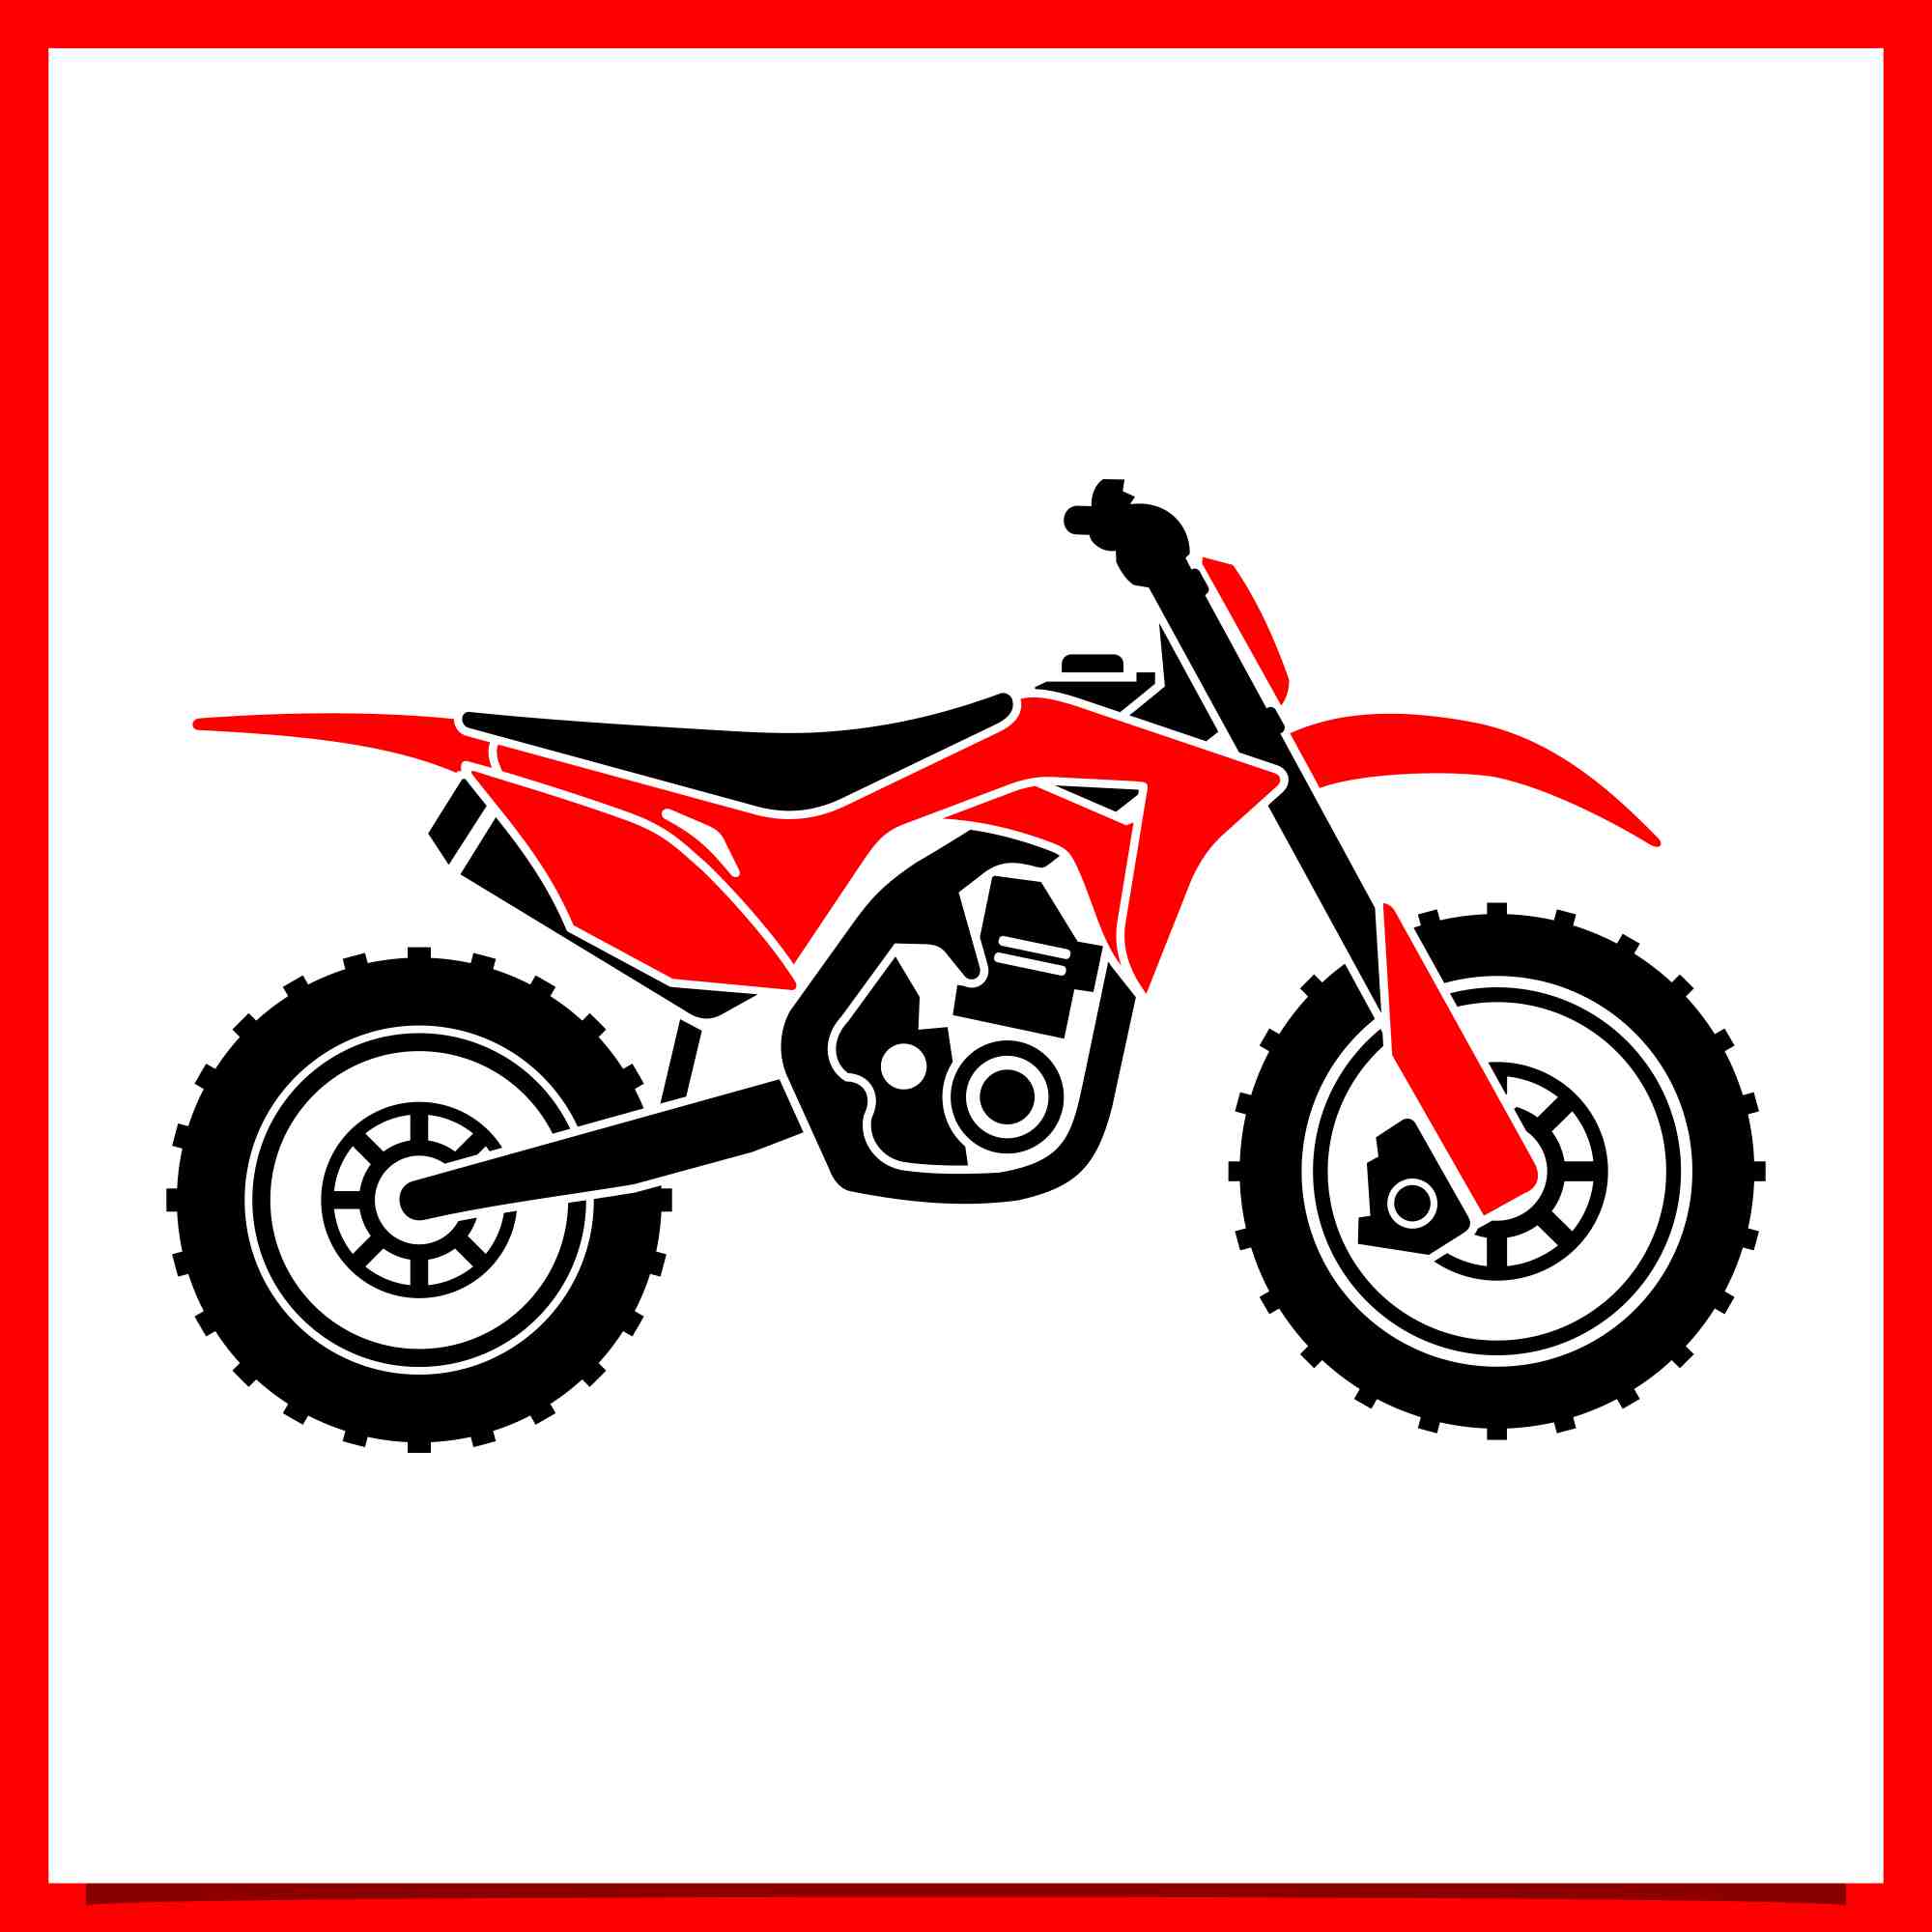 Motocross vector design collection - $5 preview image.